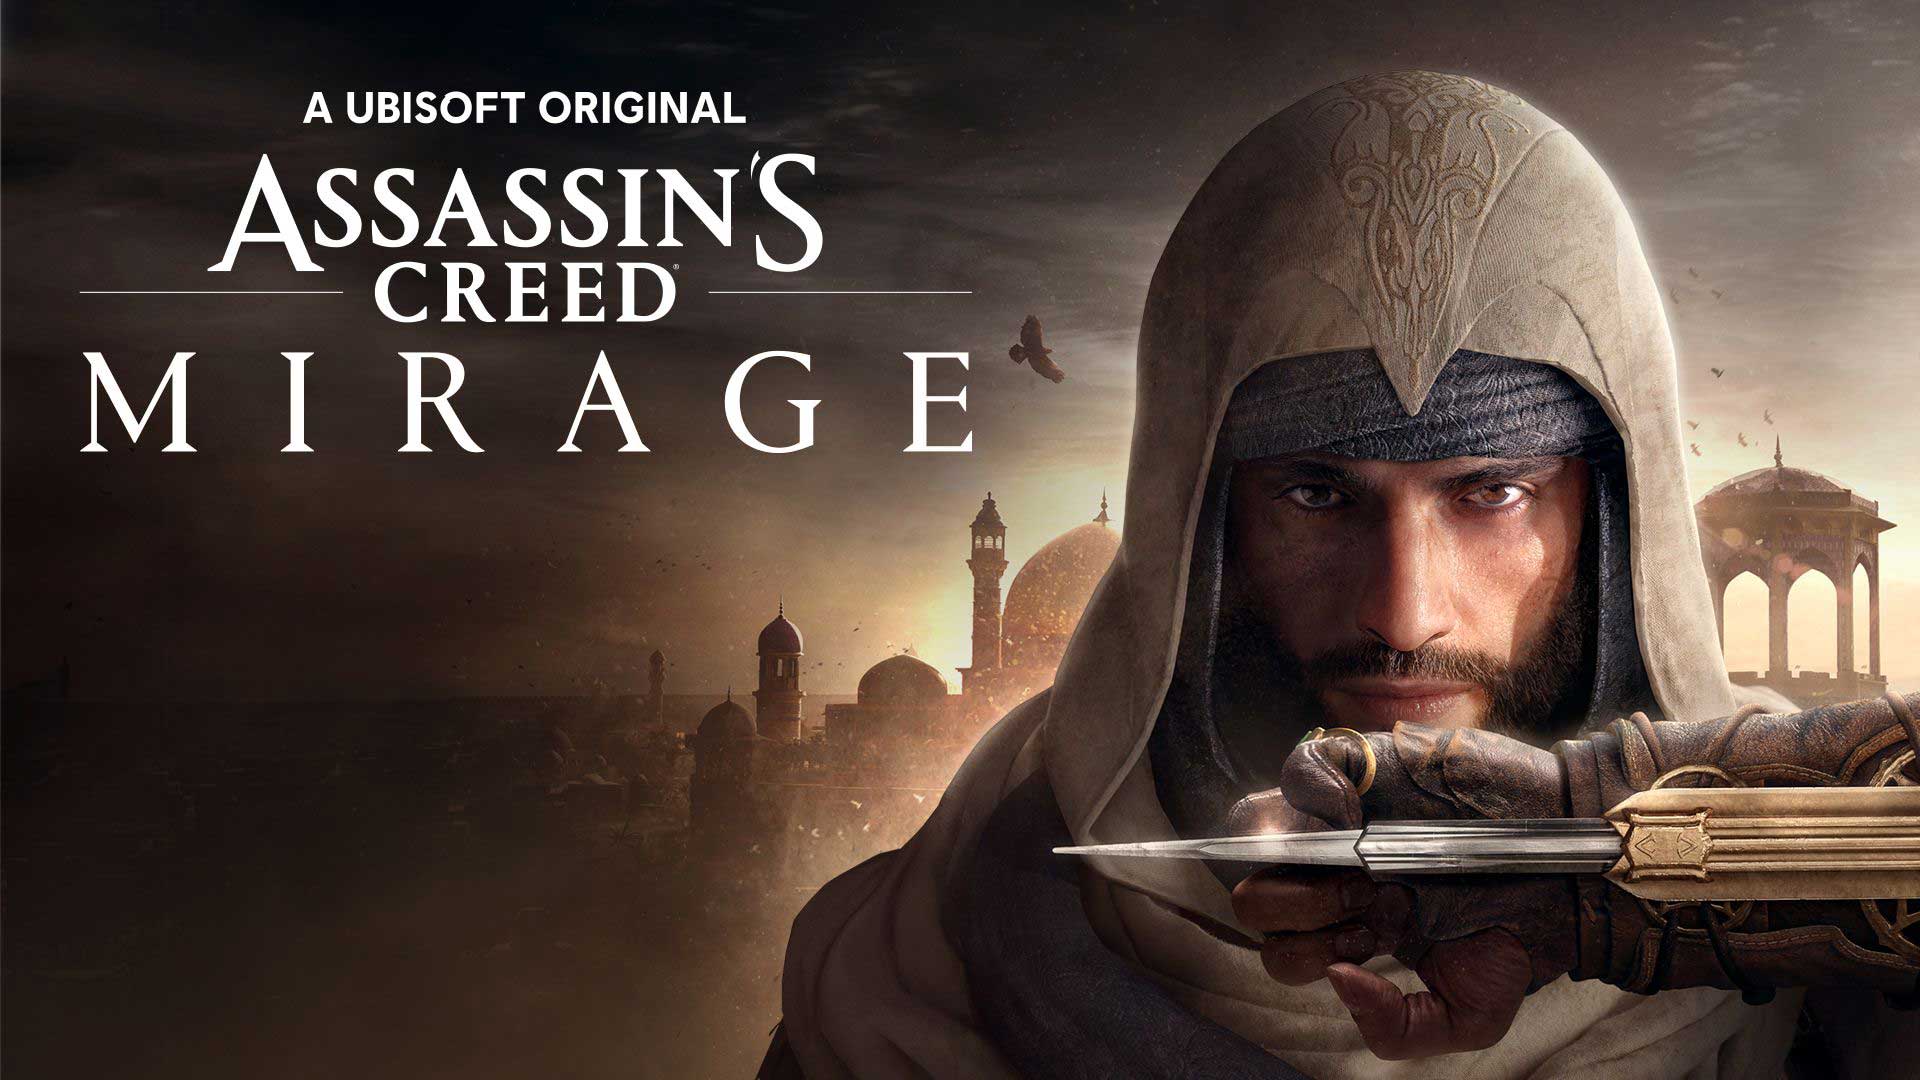 Assassin’s Creed Mirage, Go Game A Lot, gogamealot.com